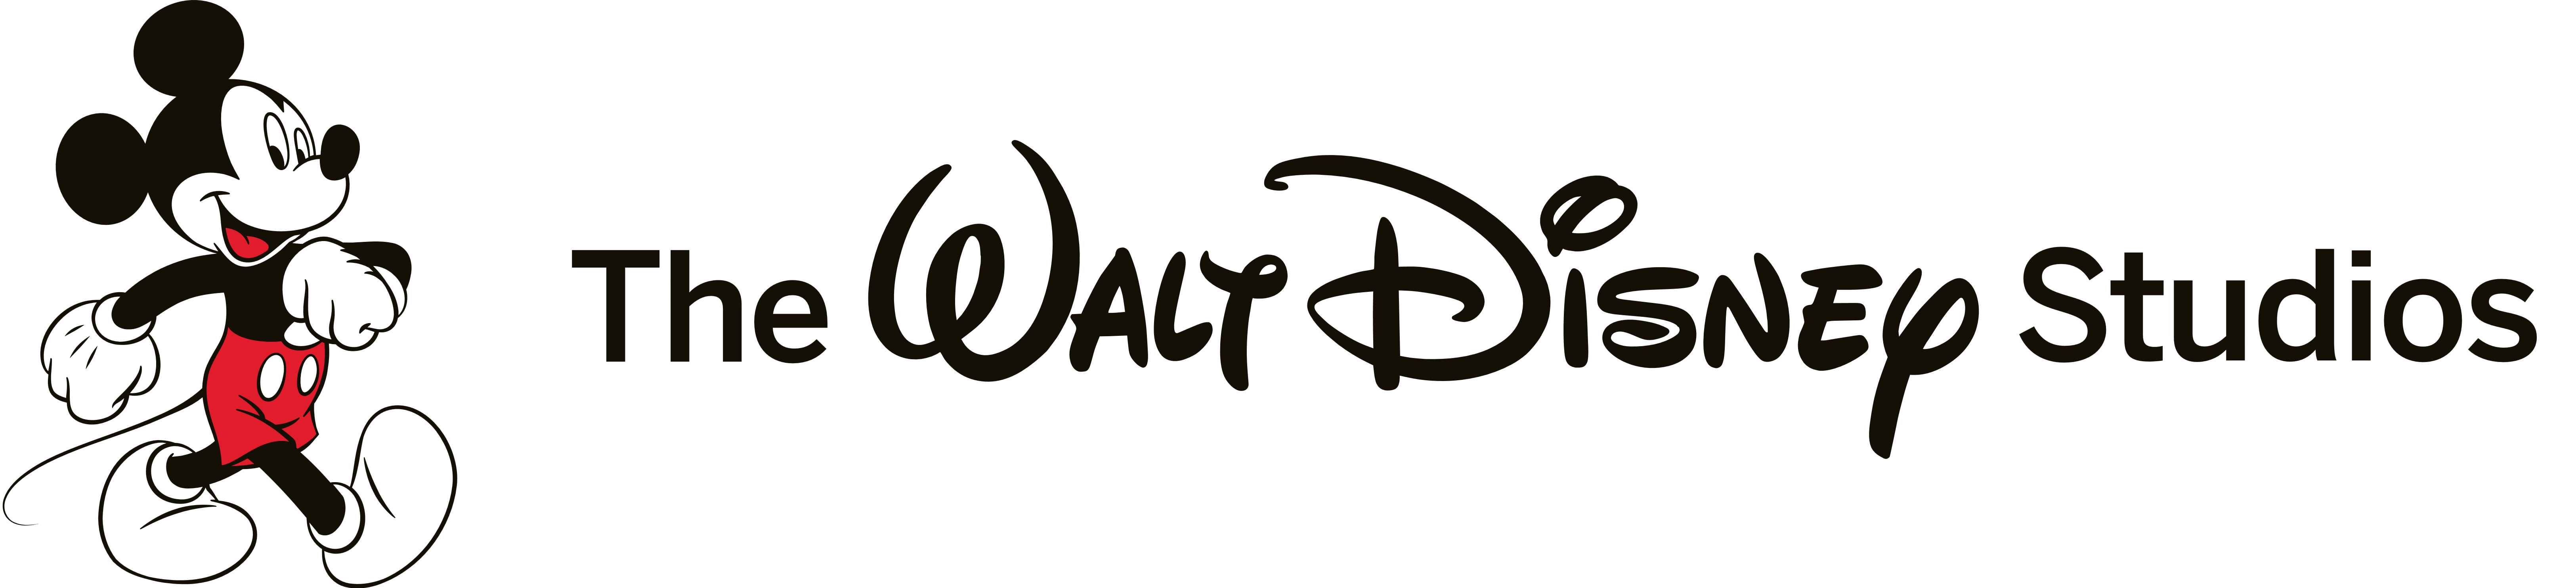 Walt Disney Logo PNG Pic Background